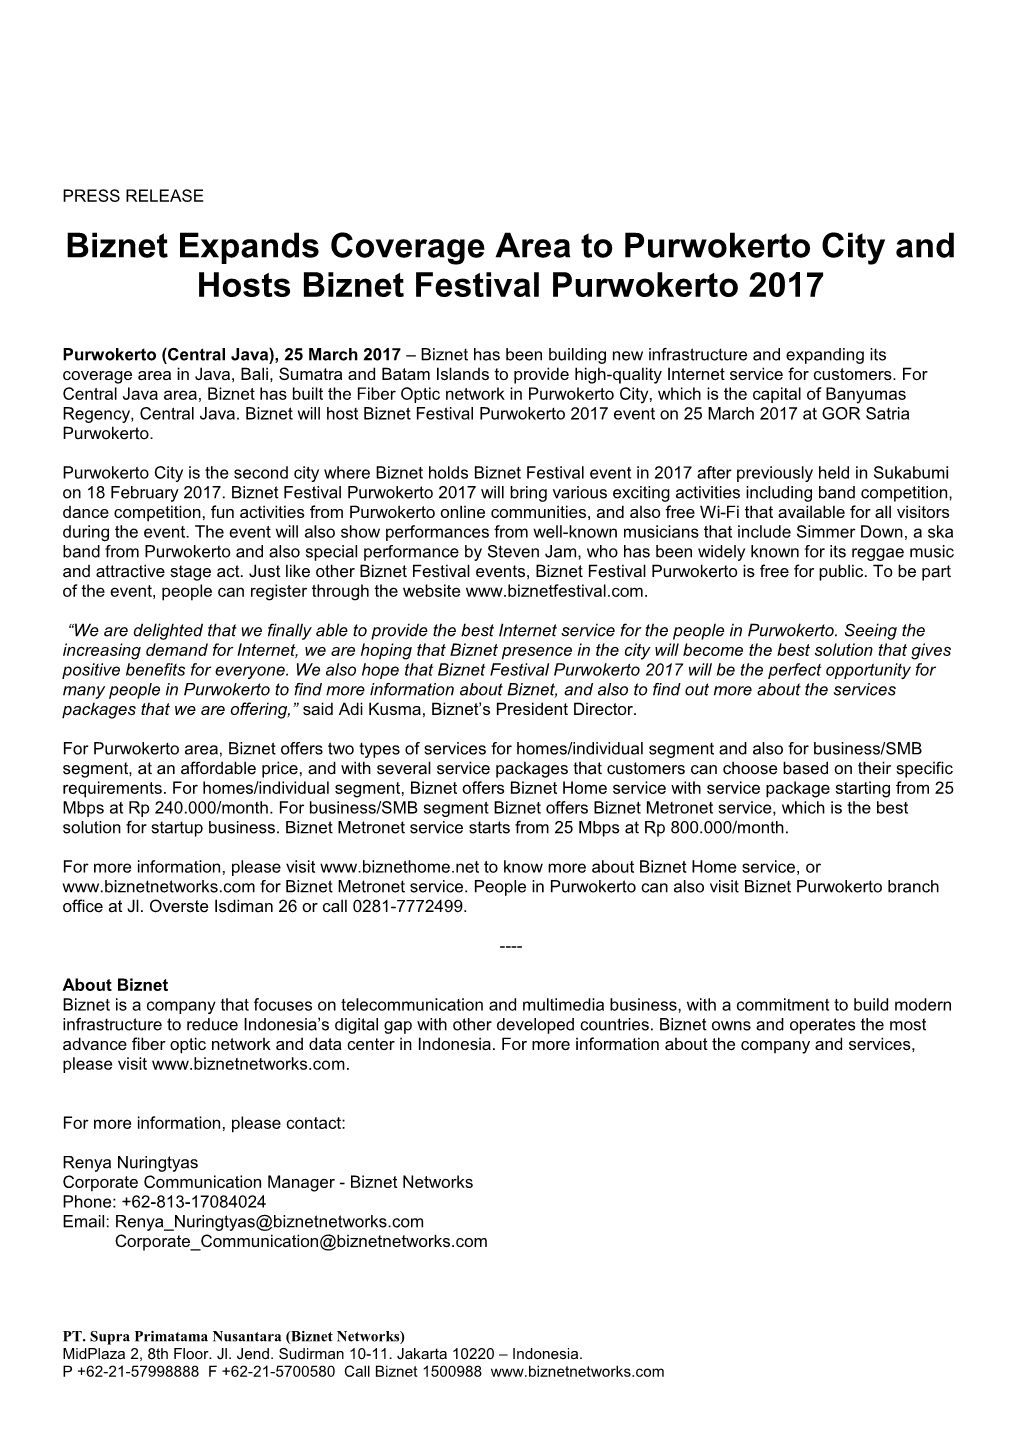 Biznet Expands Coverage Area to Purwokerto City and Hosts Biznet Festival Purwokerto 2017